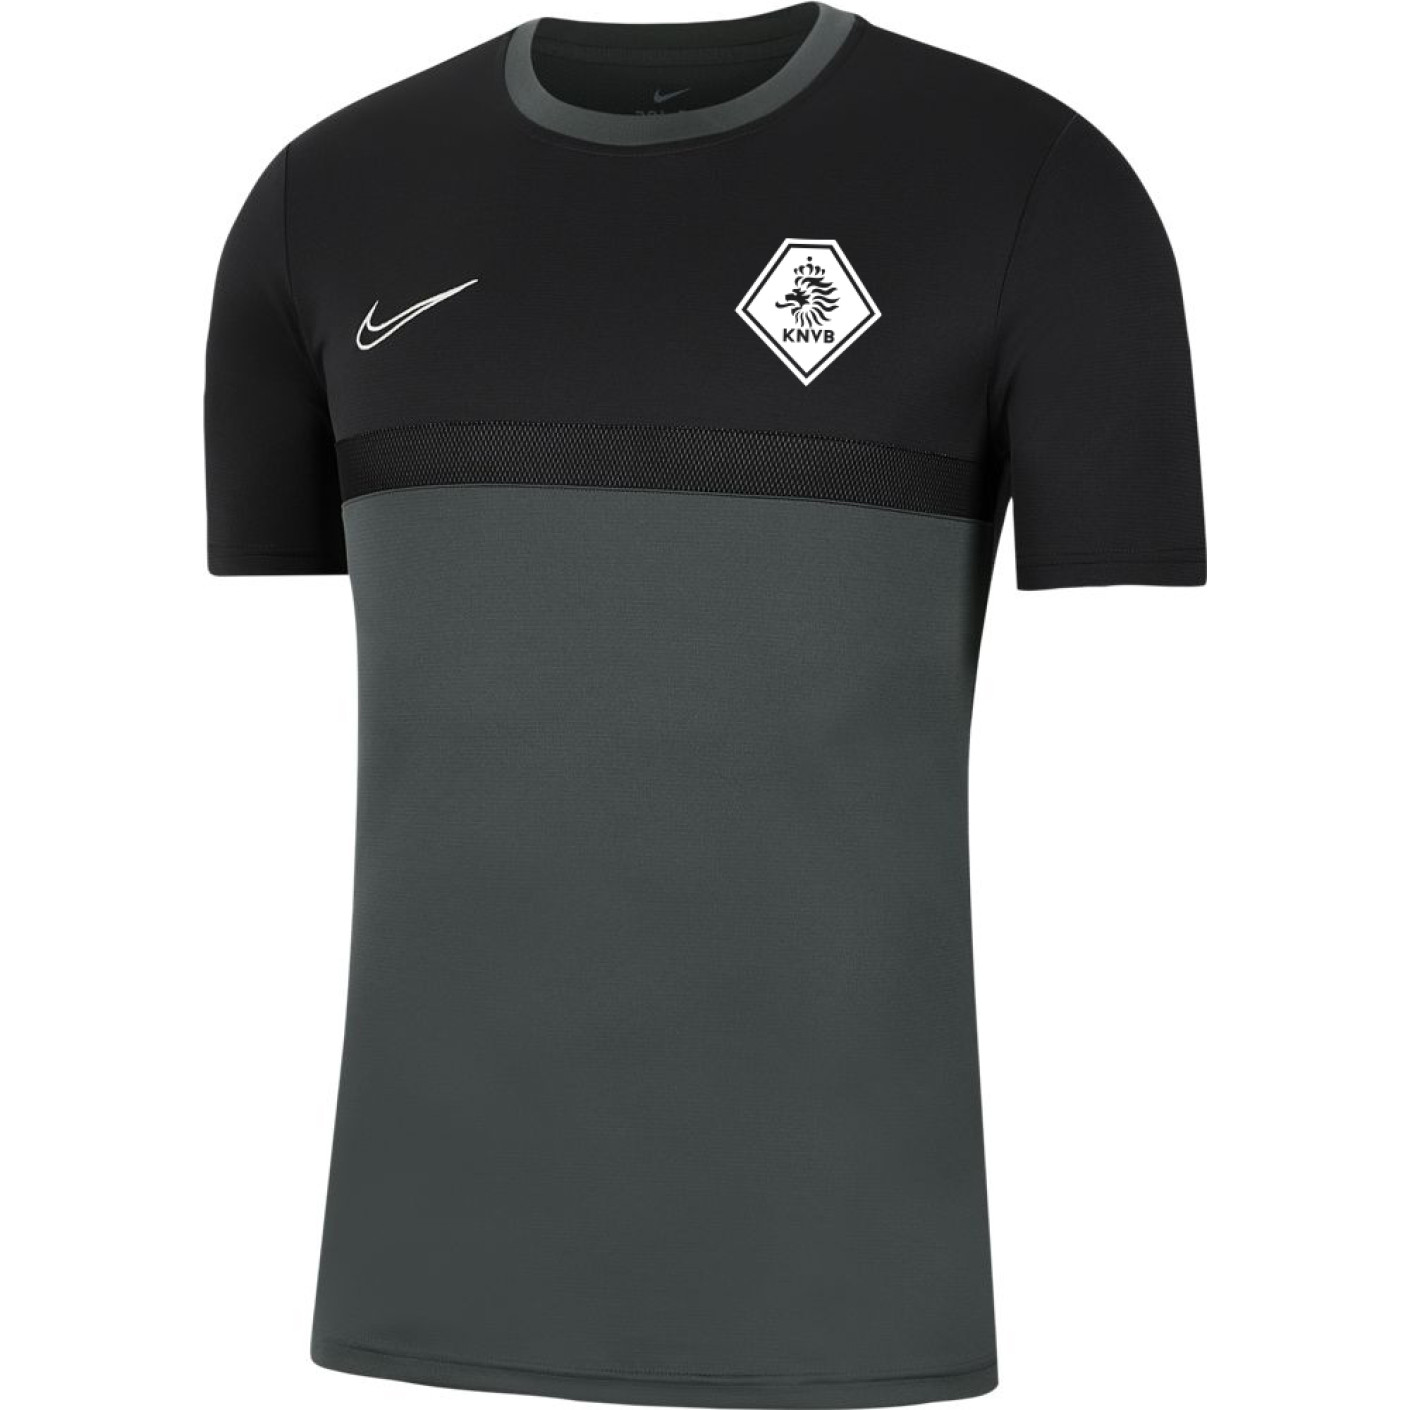 Nike KNVB Academy Pro Training Shirt Kids Anthracite Black